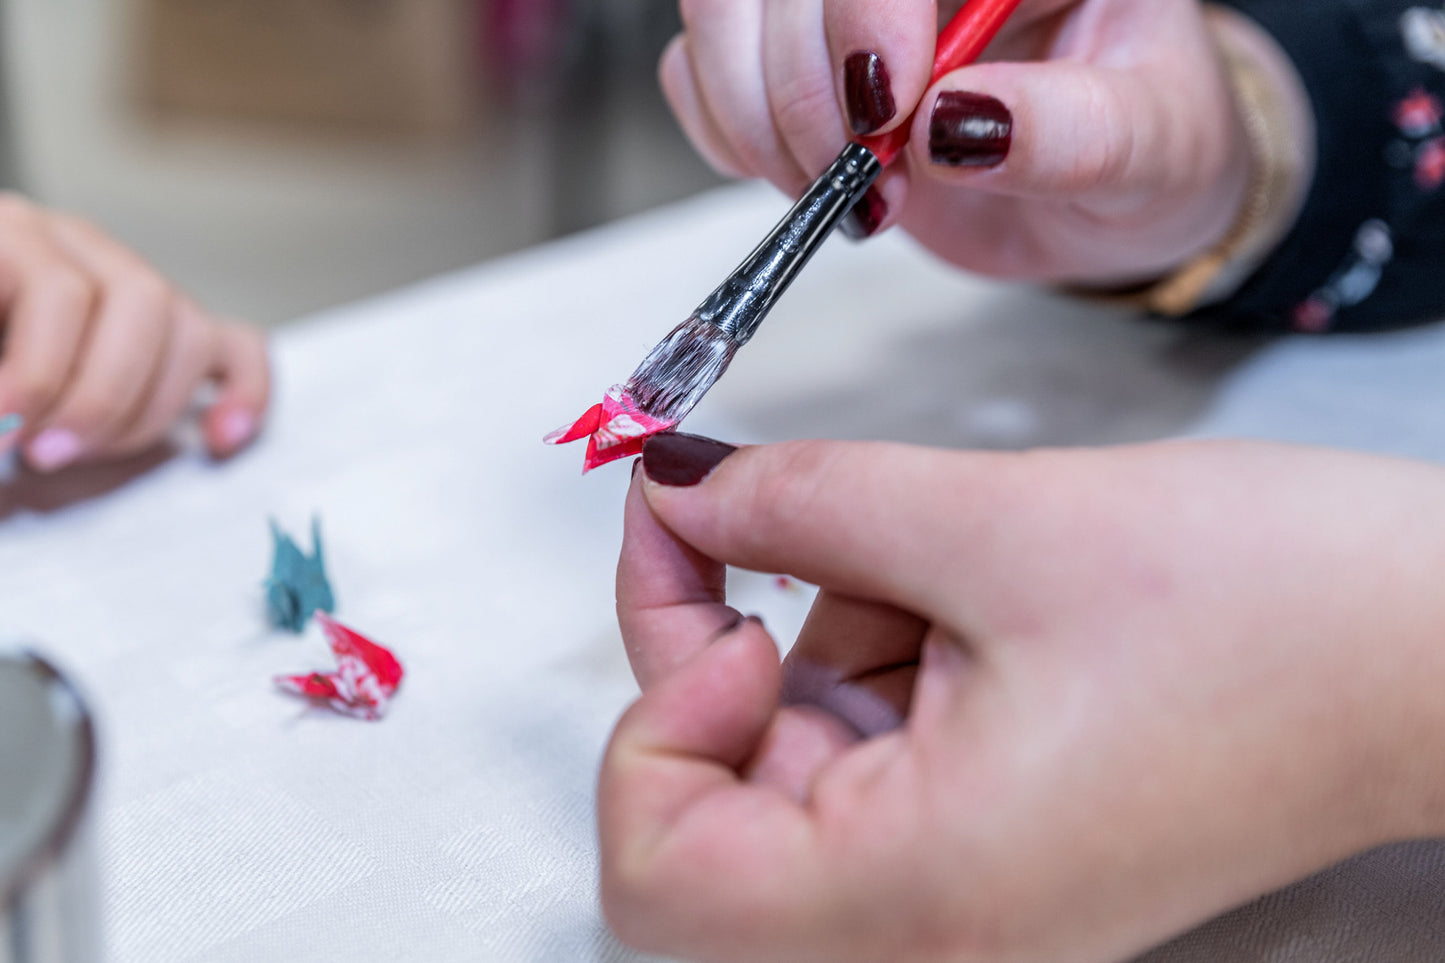 Workshop - Creation of a pair of origami earrings